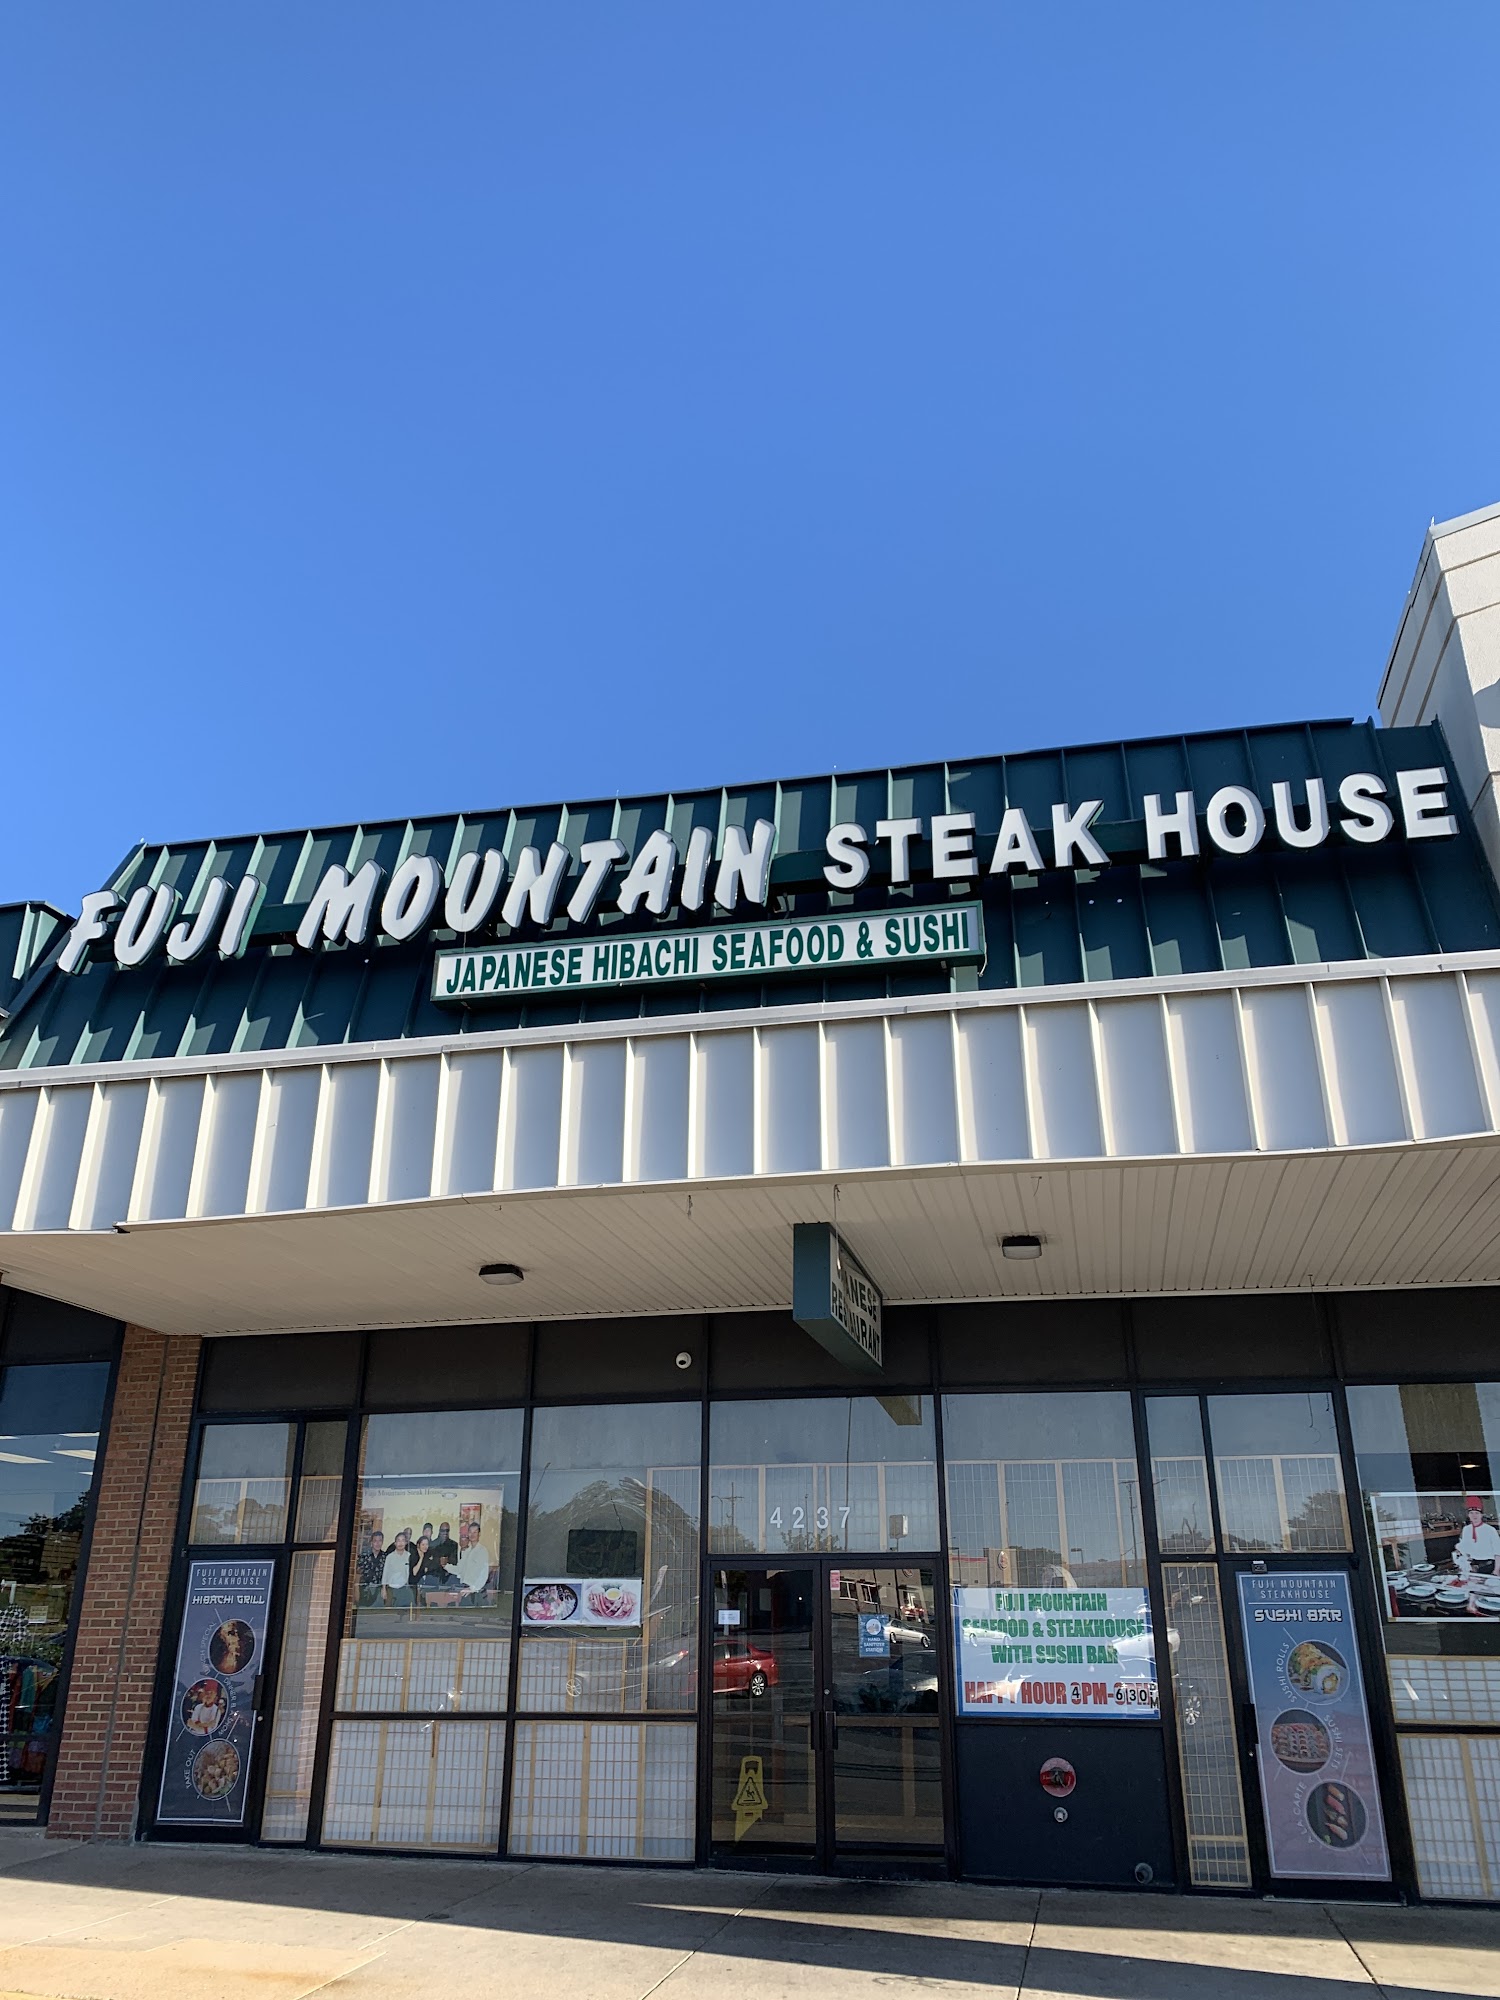 Fuji mountain steakhouse